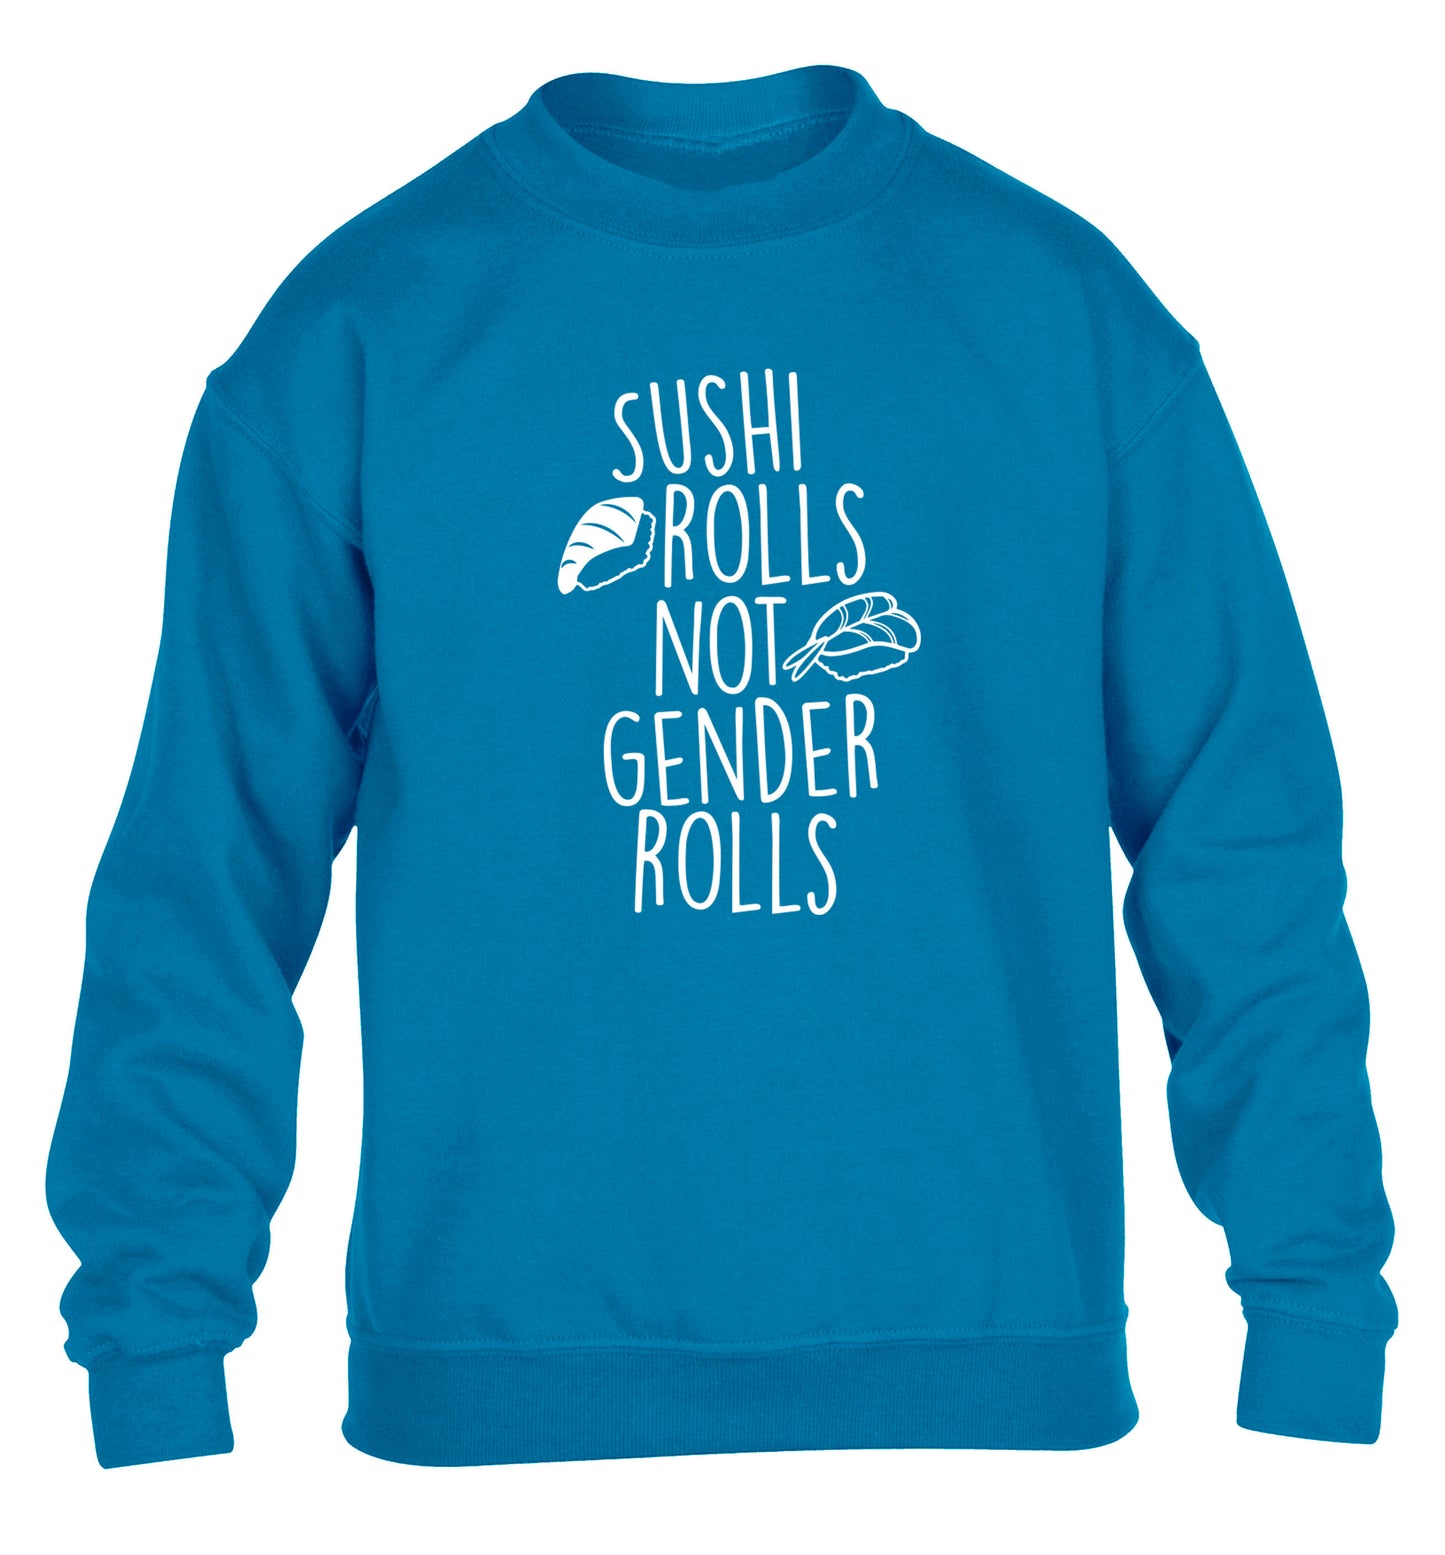 Sushi rolls not gender rolls children's blue sweater 12-14 Years